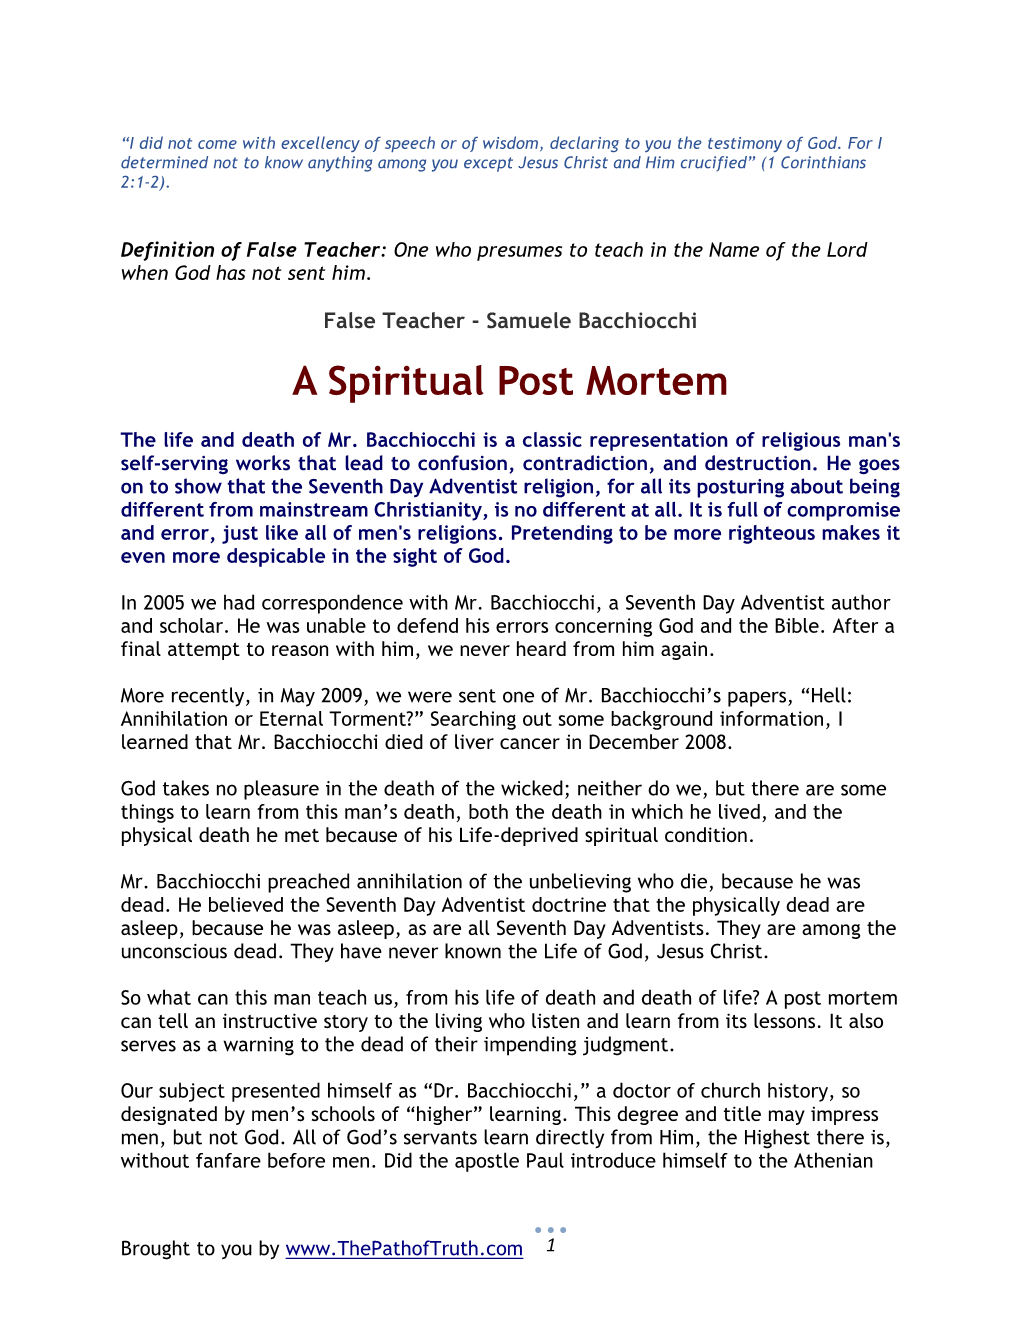 A Spiritual Post Mortem